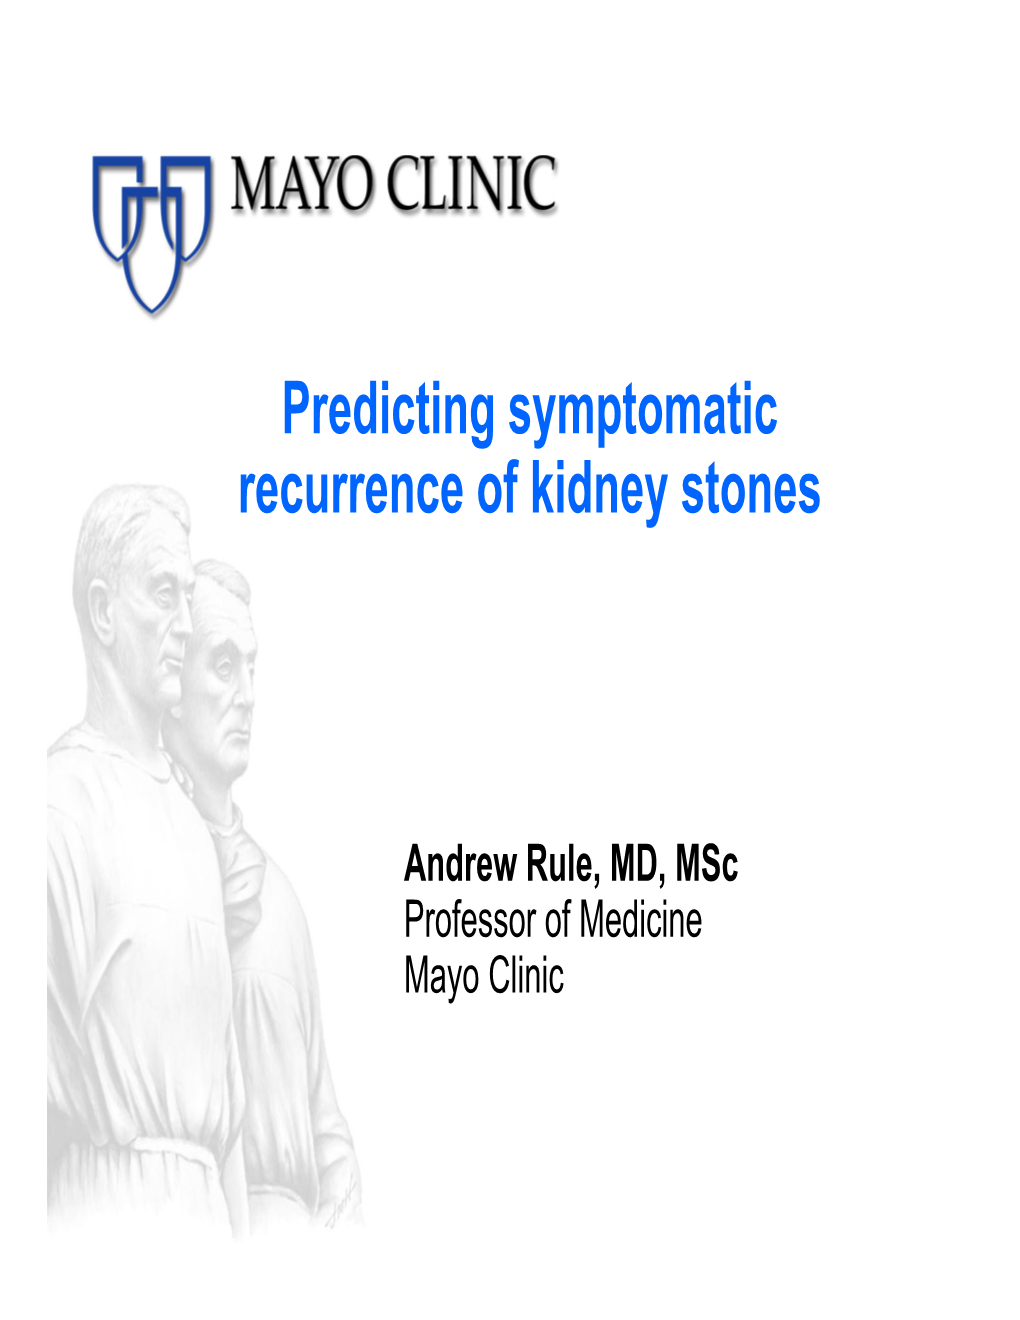 Predicting Symptomatic Recurrence of Kidney Stones